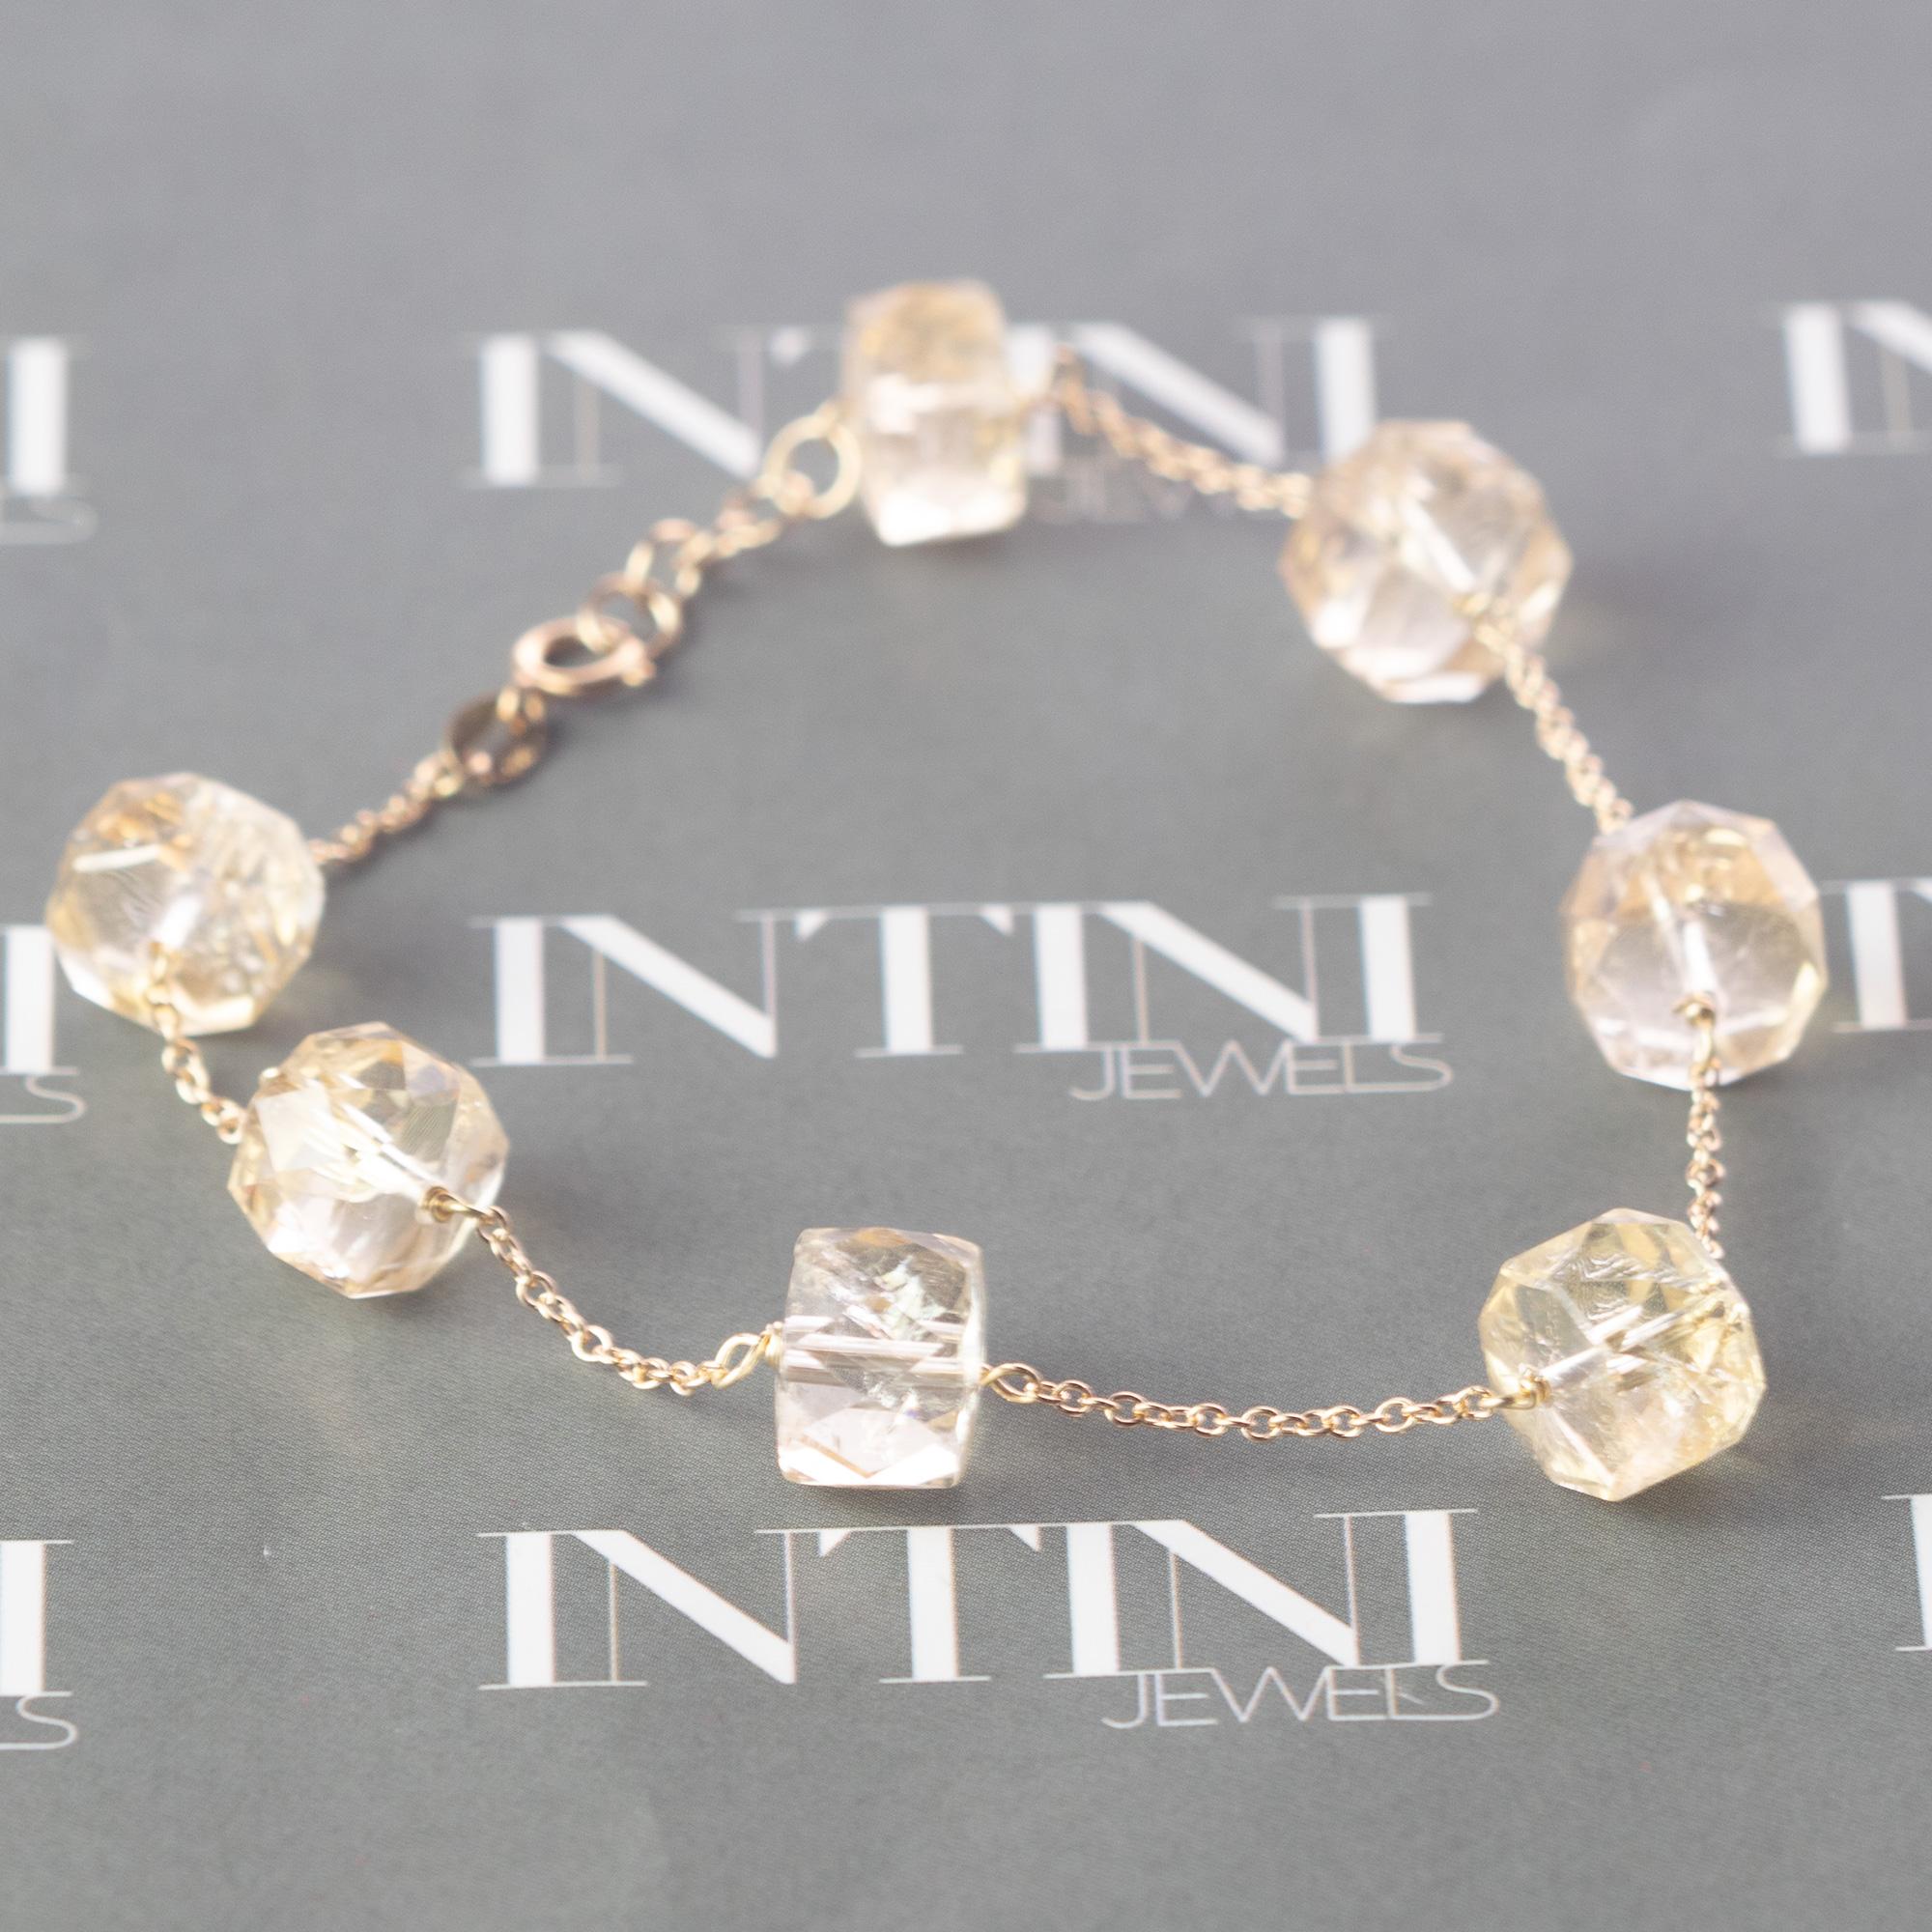 Art Nouveau Intini Jewels 14 Karat Yellow Gold Chain Citrine Beads Handmade Chain Bracelet For Sale